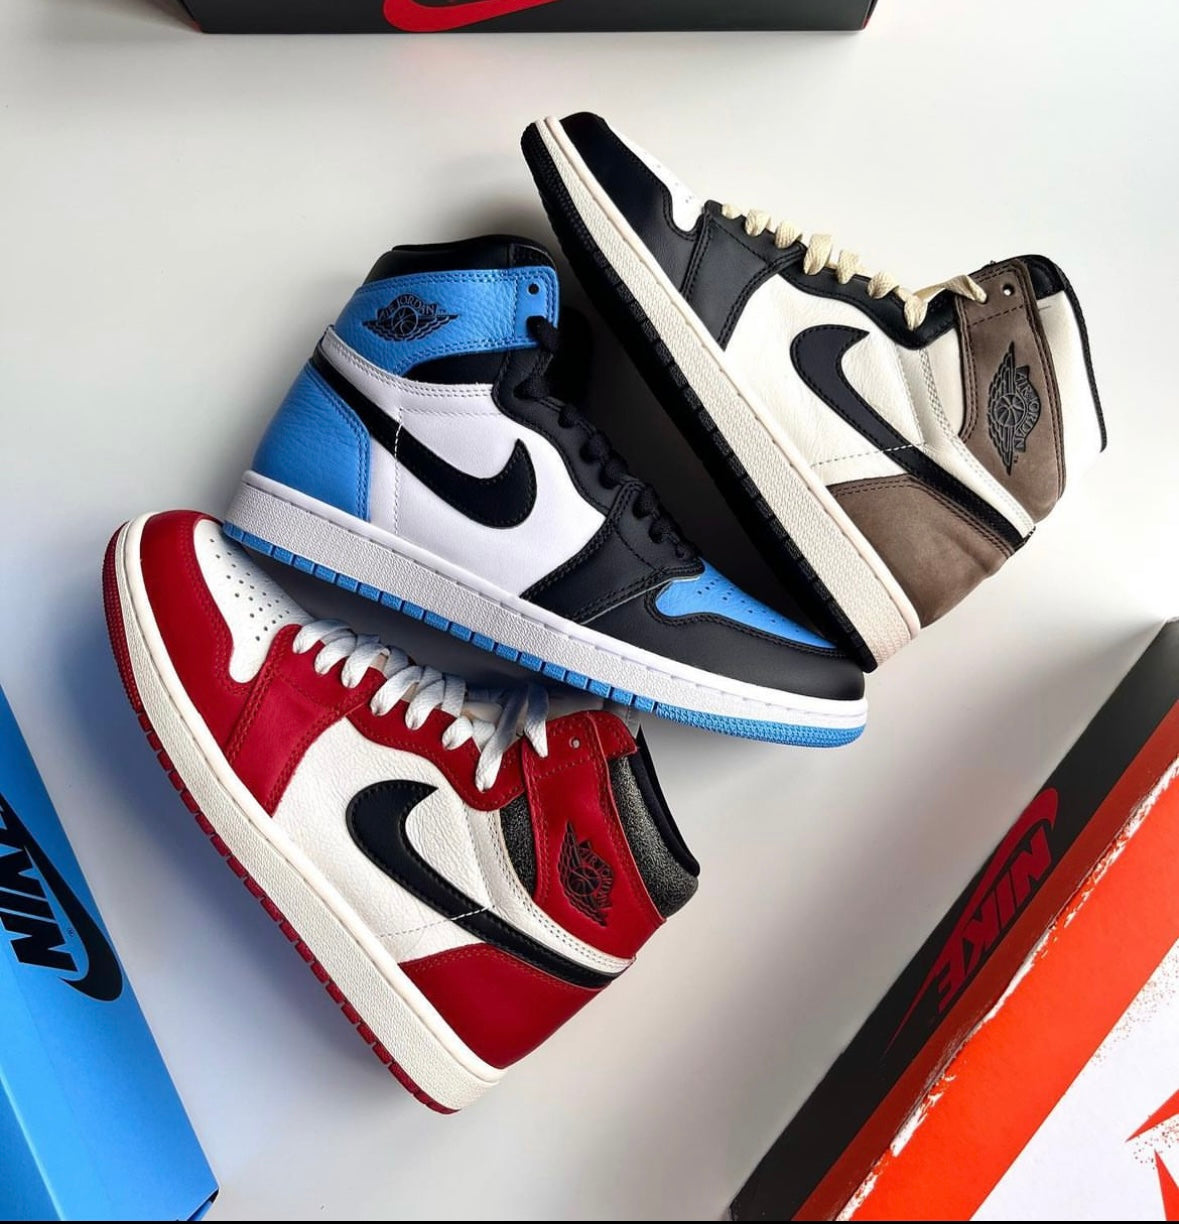 Nike's Air Jordan 1 Chicago Release Will Test Efforts to Rebuild Trust